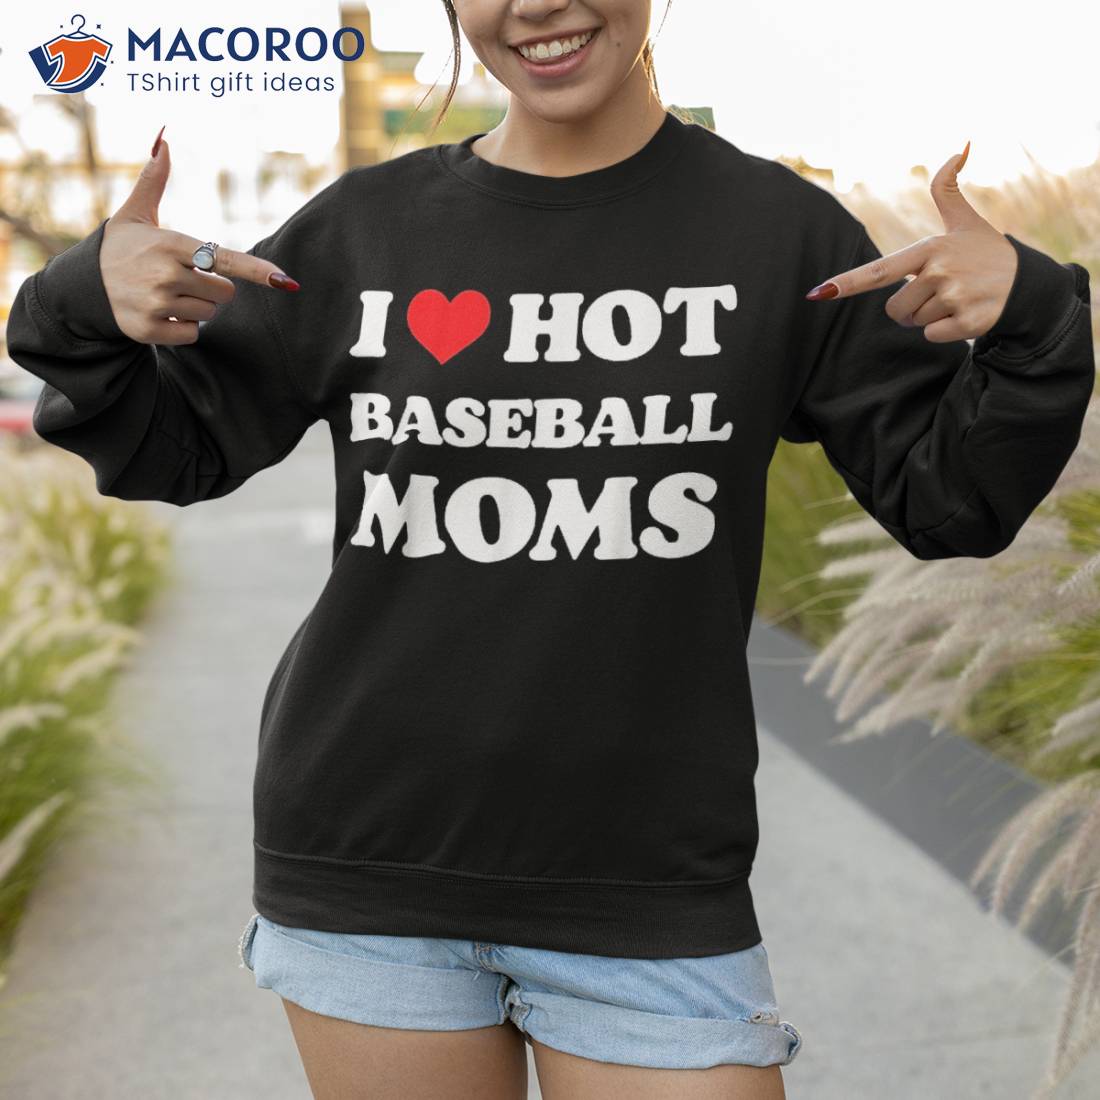 I Love Hot Baseball Moms, Funny Heart Mom Shirt